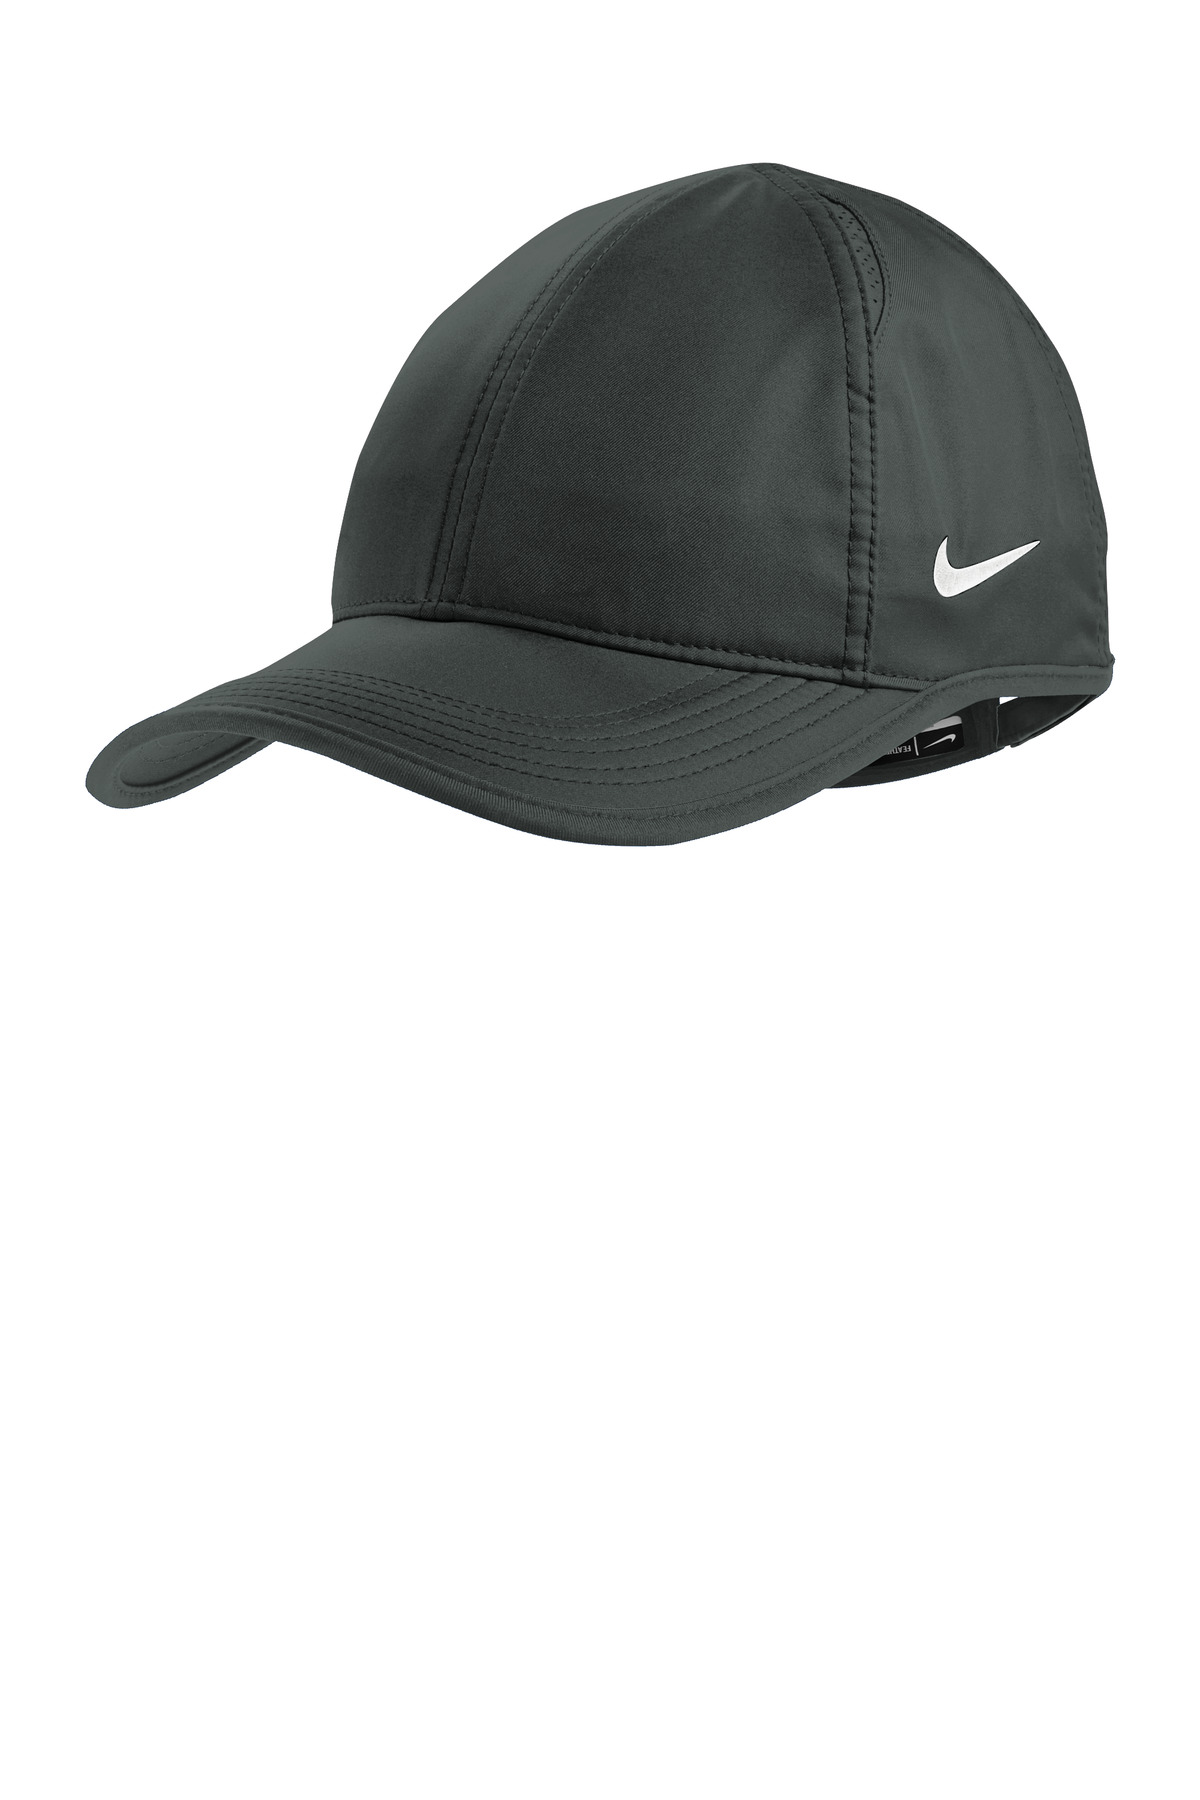 Nike Dri-FIT Featherlight Performance Cap-